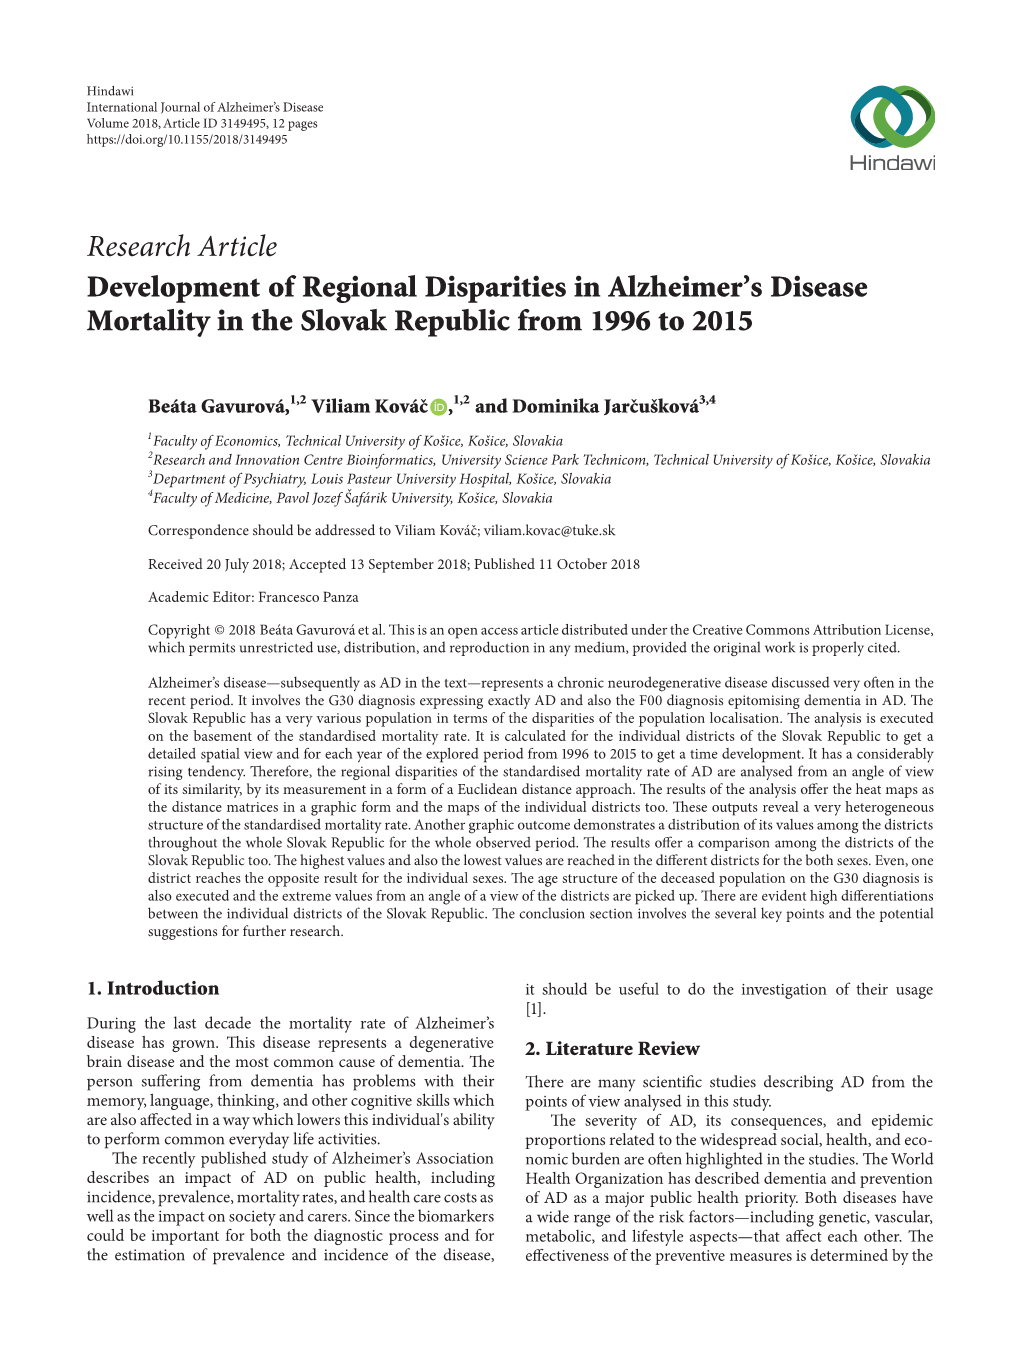 Research Article Development of Regional Disparities in Alzheimer's